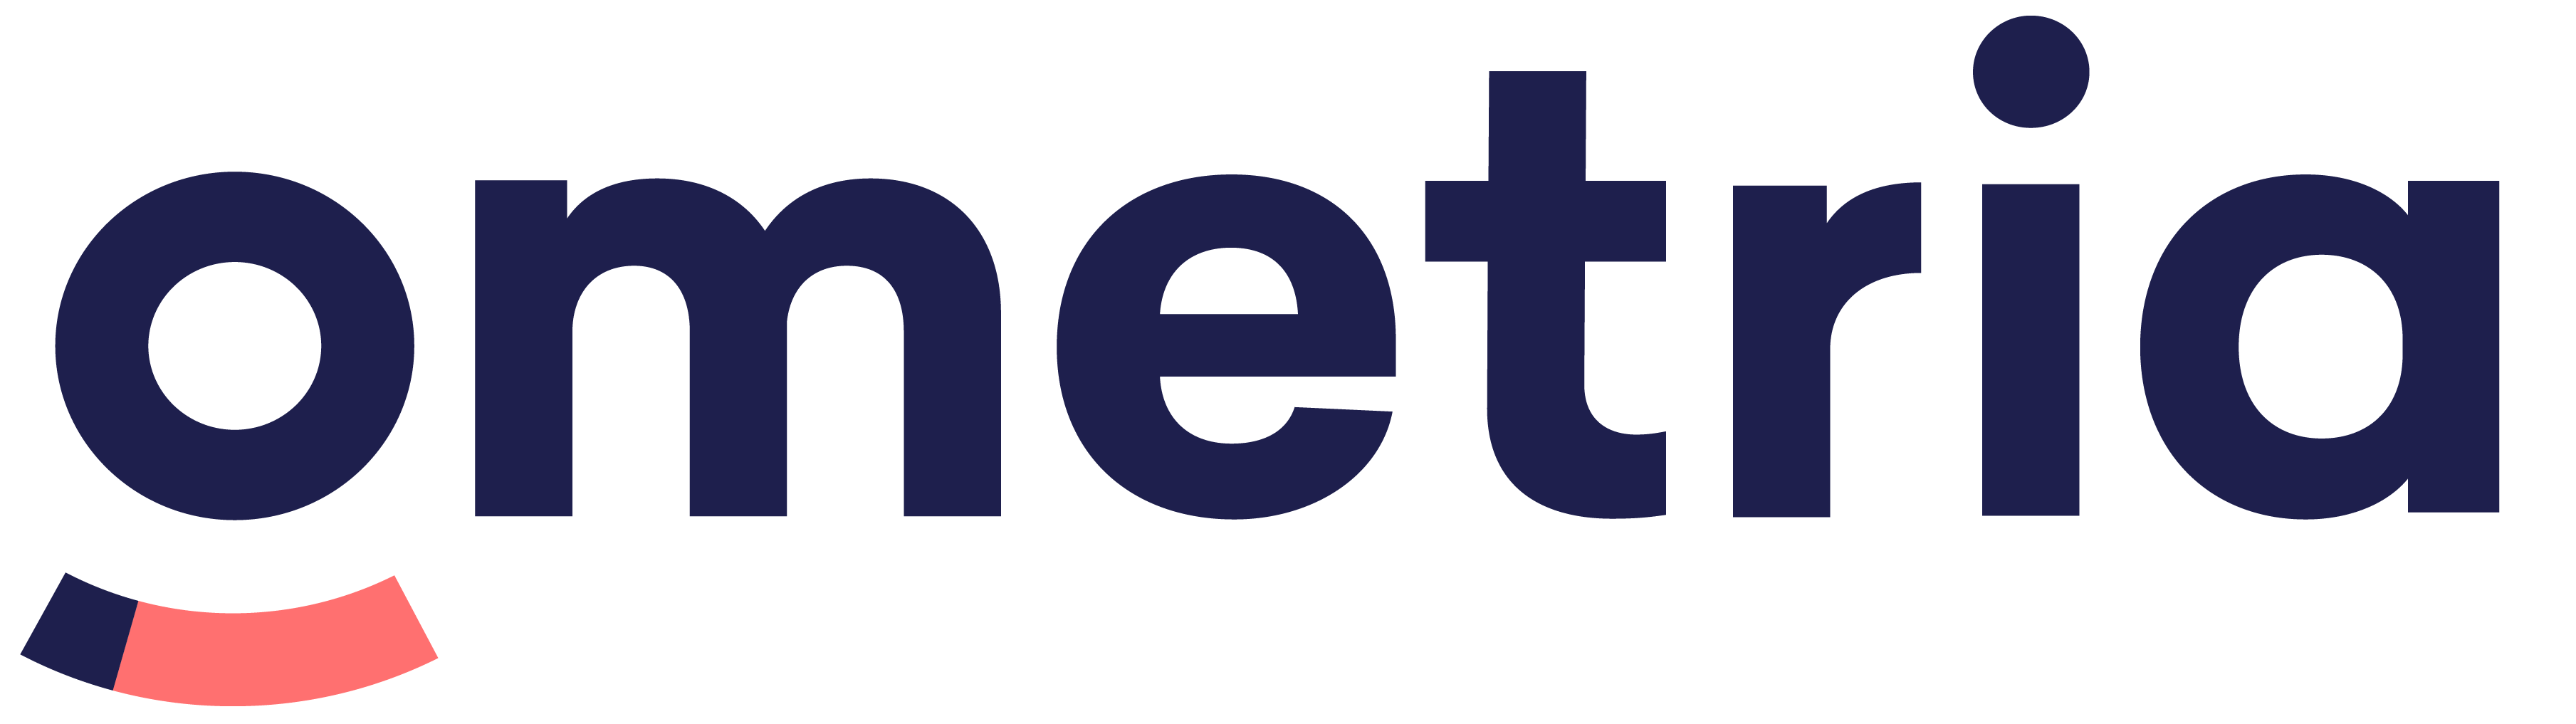 Ometria Logo Full-01-2